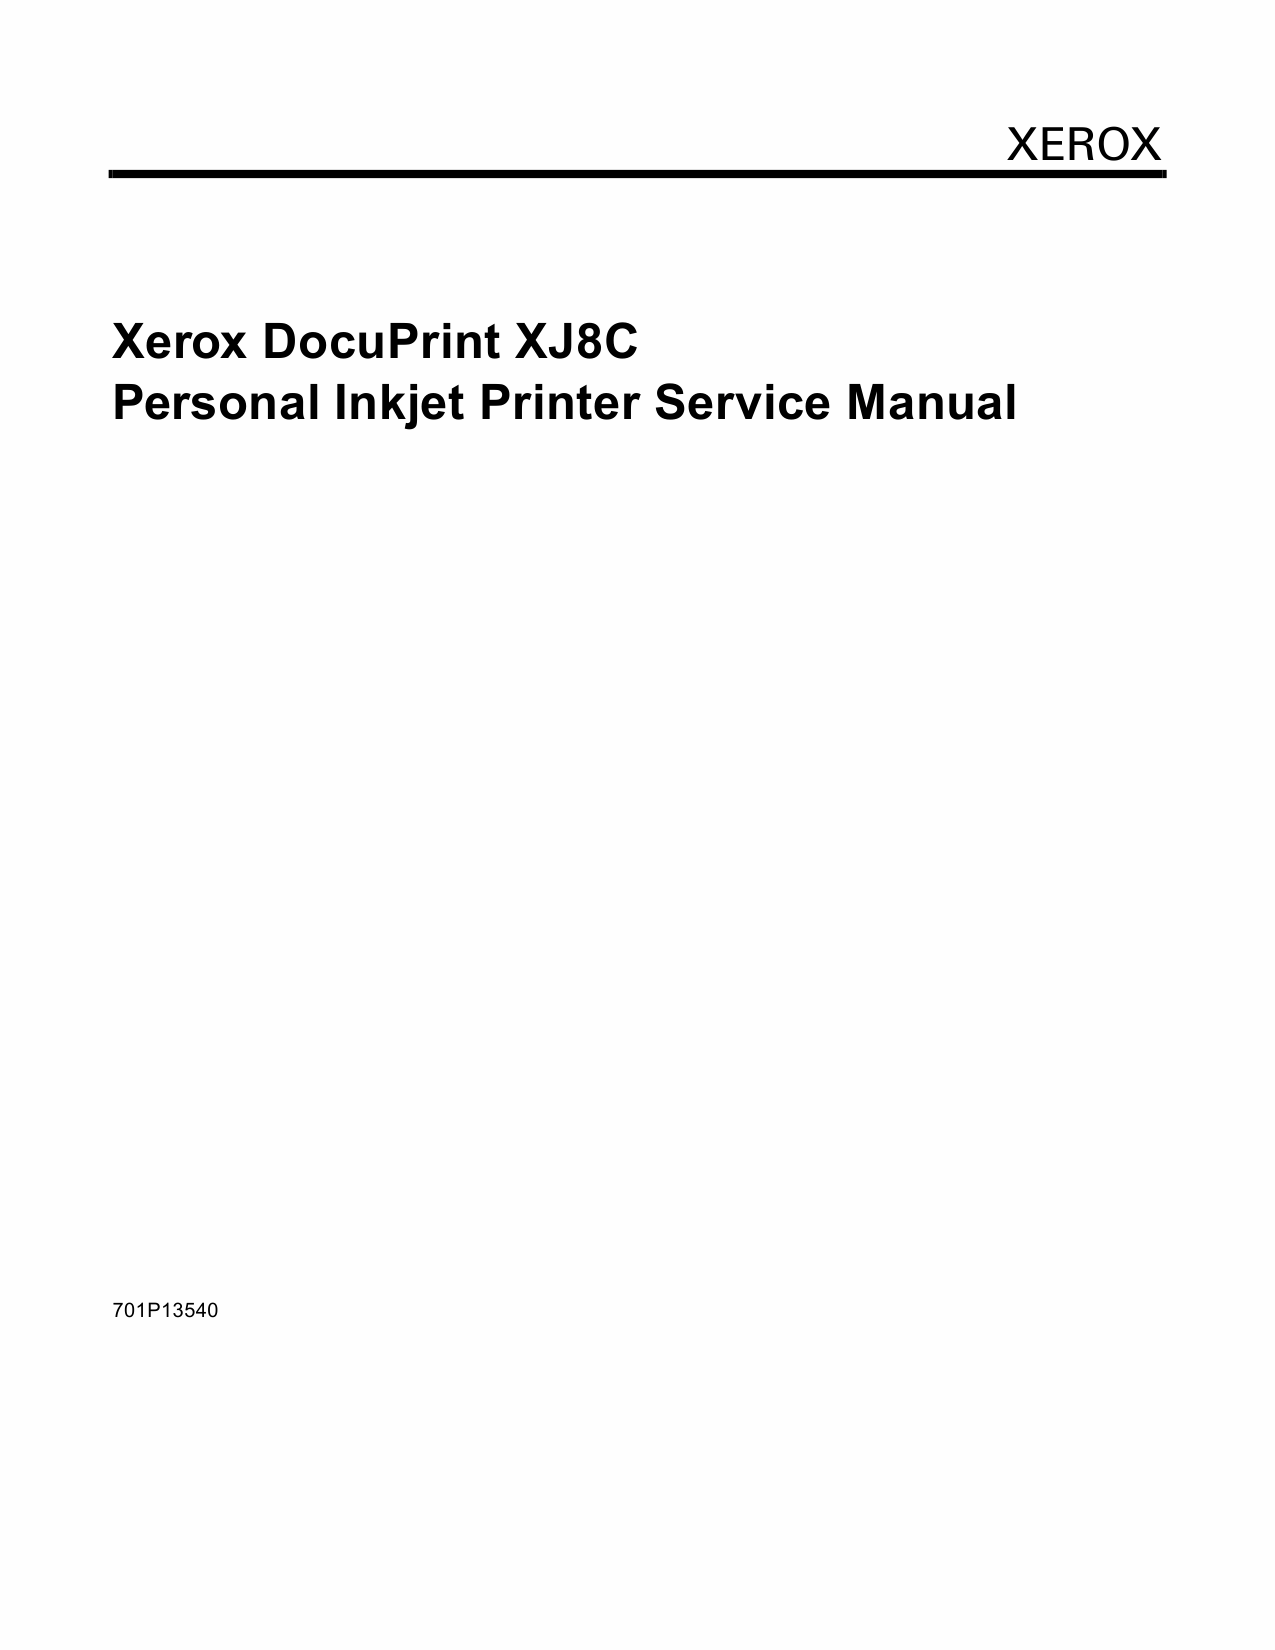 Xerox Printer XJ8C Inkjet Parts List and Service Manual-1